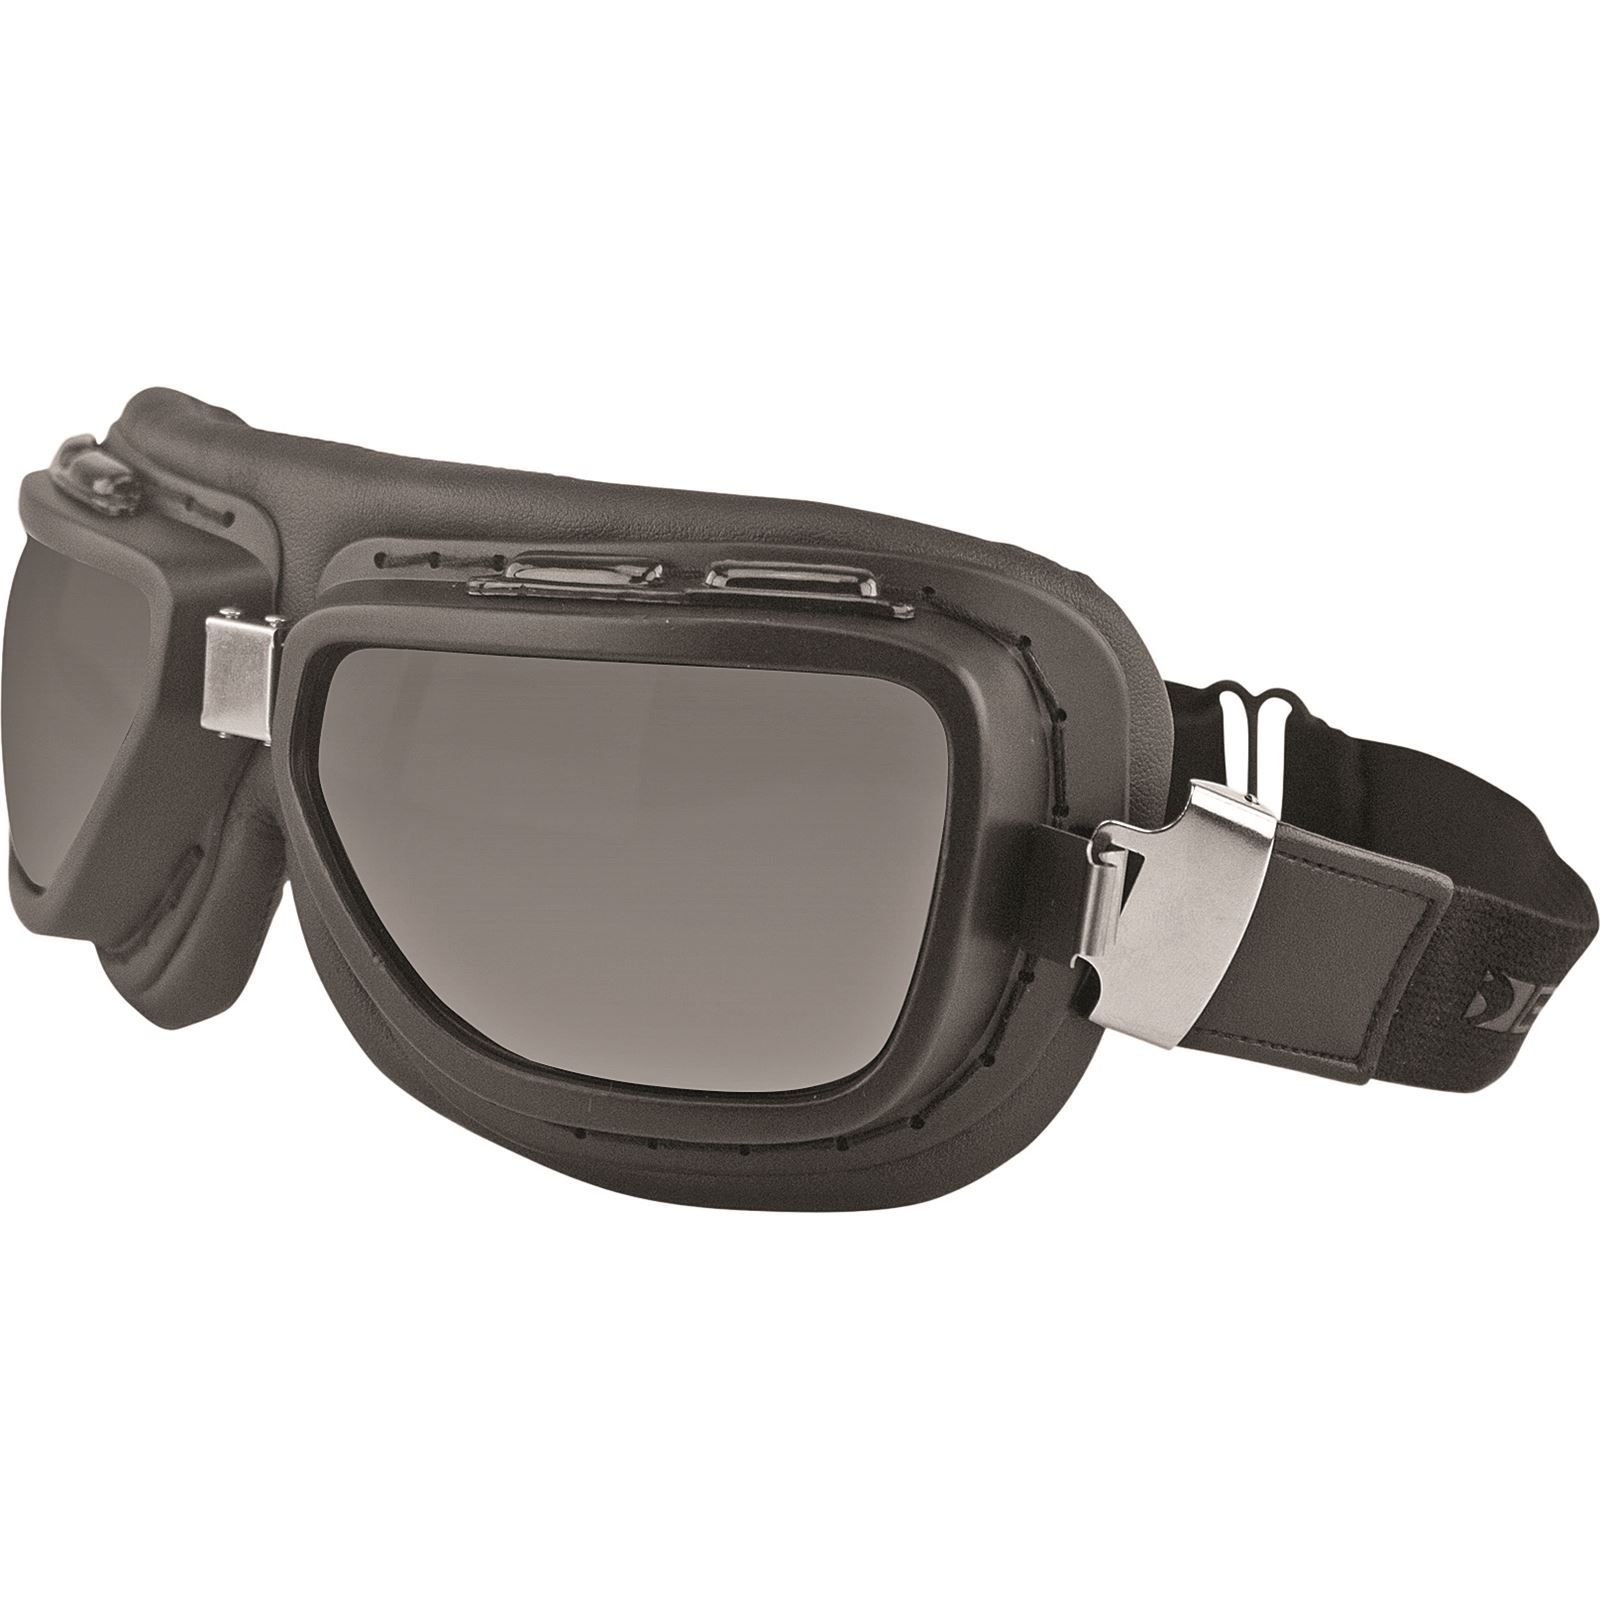 Bobster Pilot Goggles Matte Black with Interchangeable Lenses